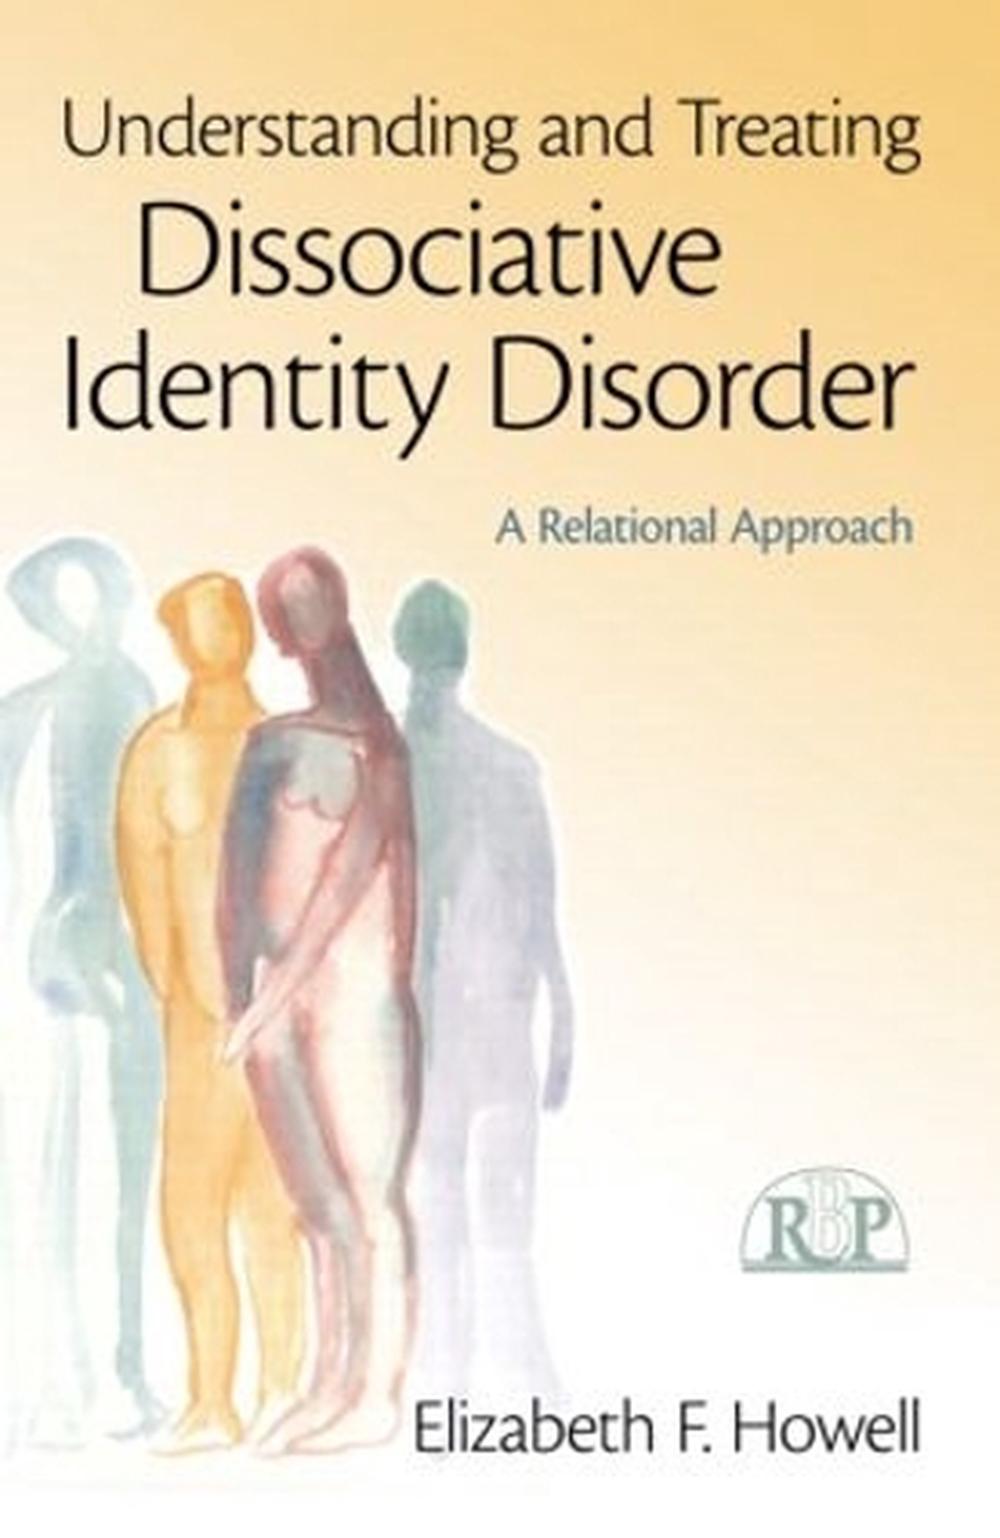 case study examples of dissociative identity disorder